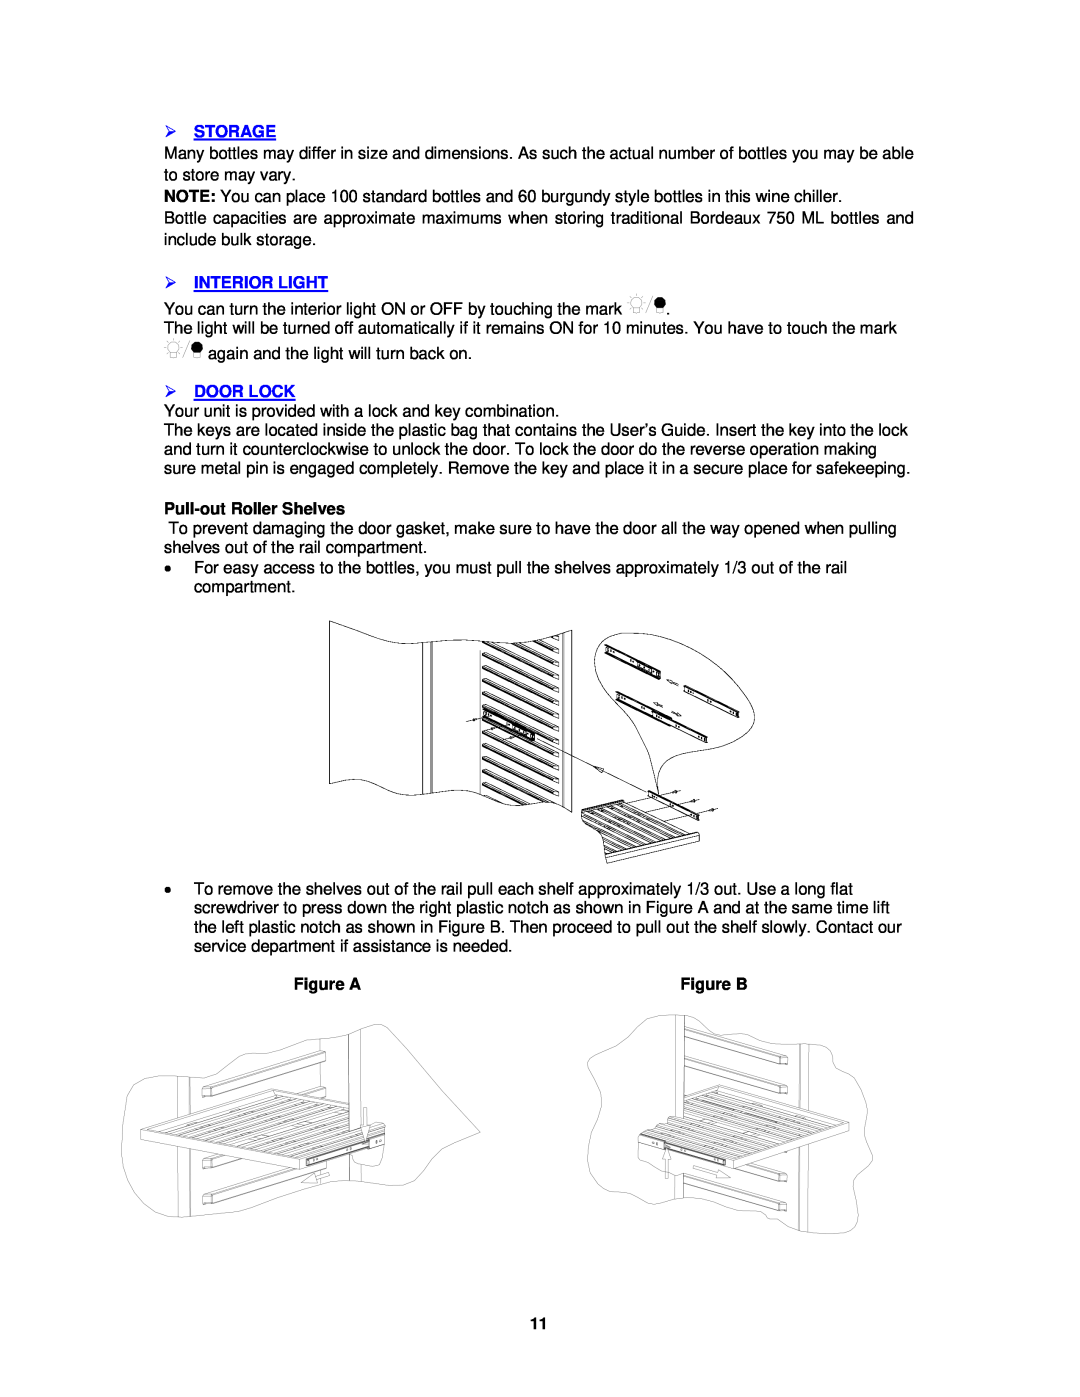 Avanti WCR682SS-2 instruction manual Storage, Interior Light, Door Lock, Pull-outRoller Shelves, Figure A 